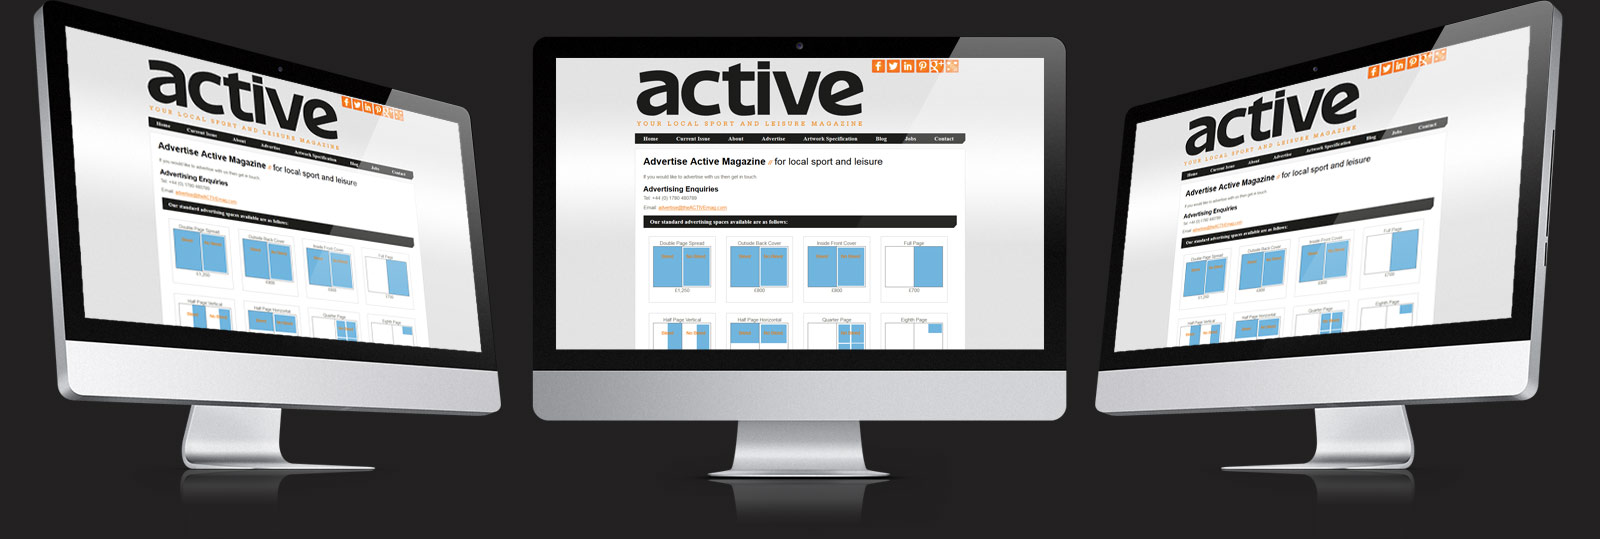 Stamford Web Design - The Active Magazine3